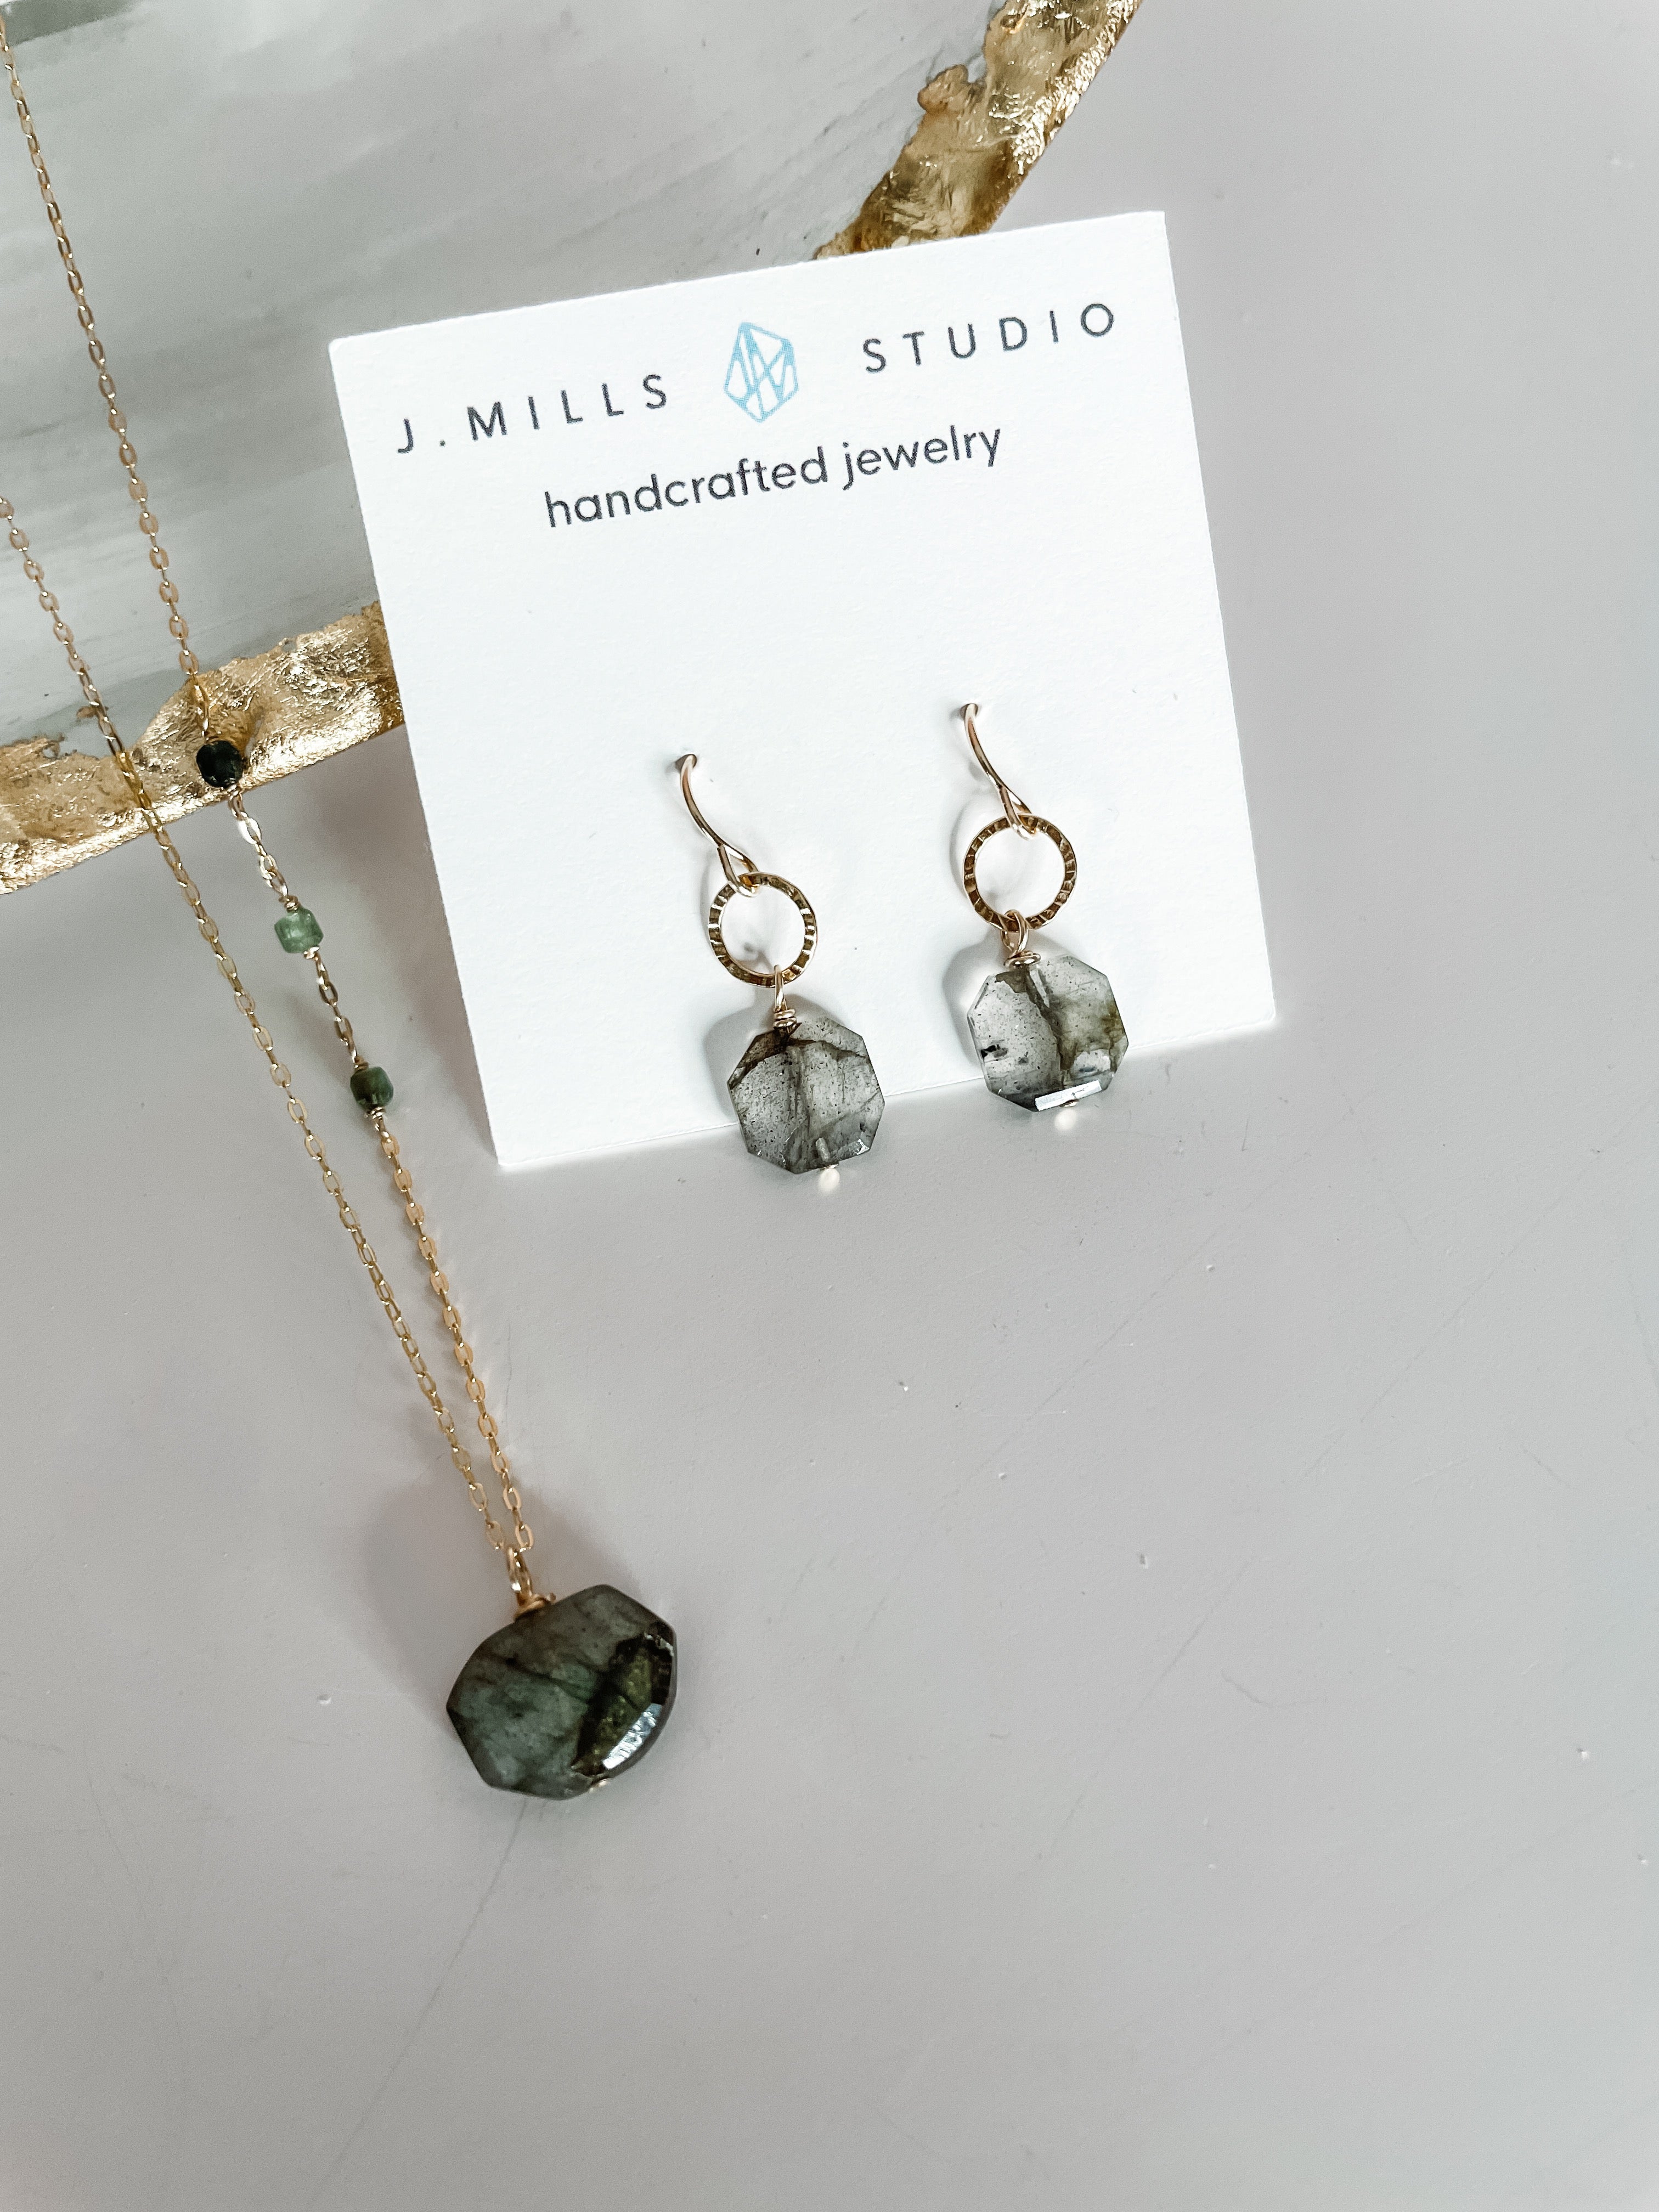 J.Mills Studio- Gold Filled with Labradorite Slice Earrings